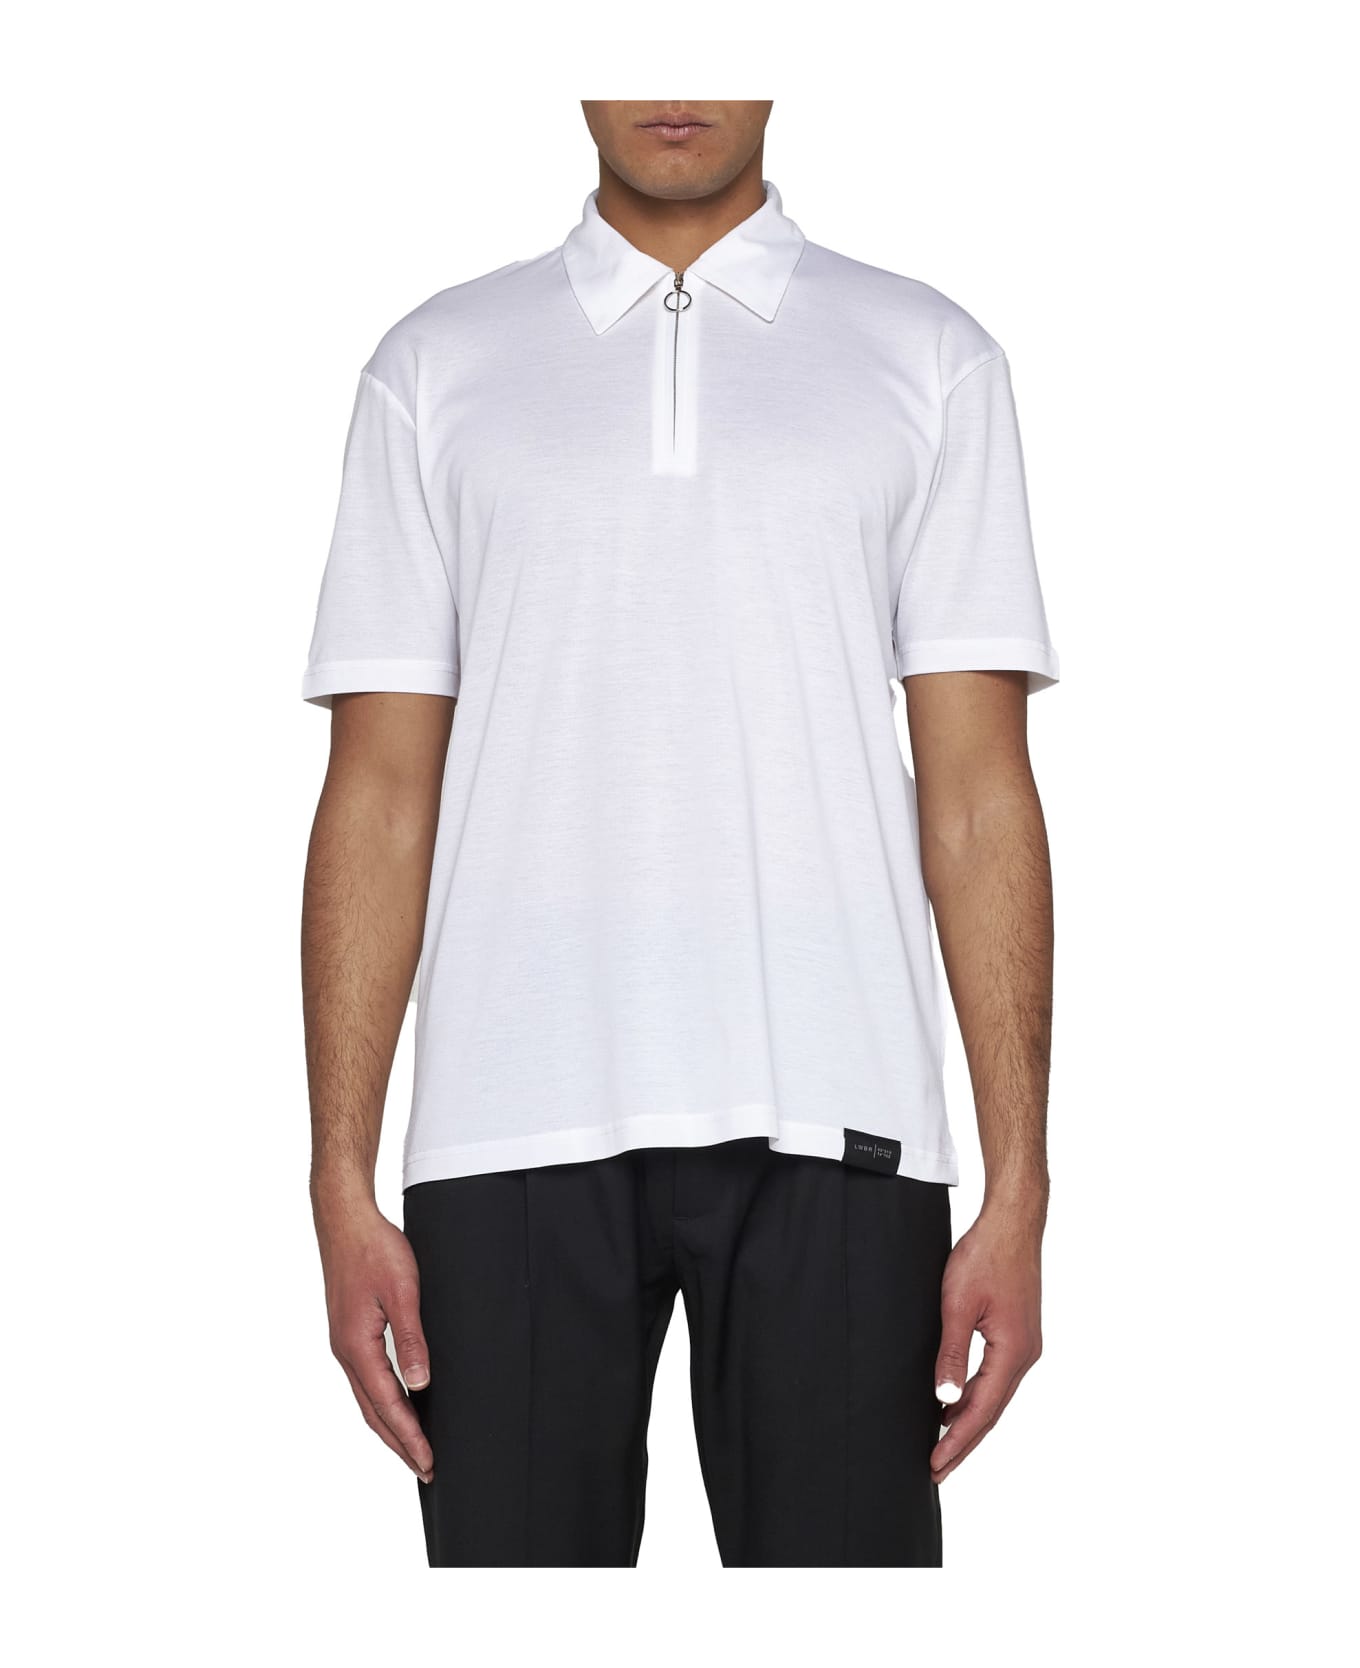 Low Brand Polo Shirt - White ポロシャツ